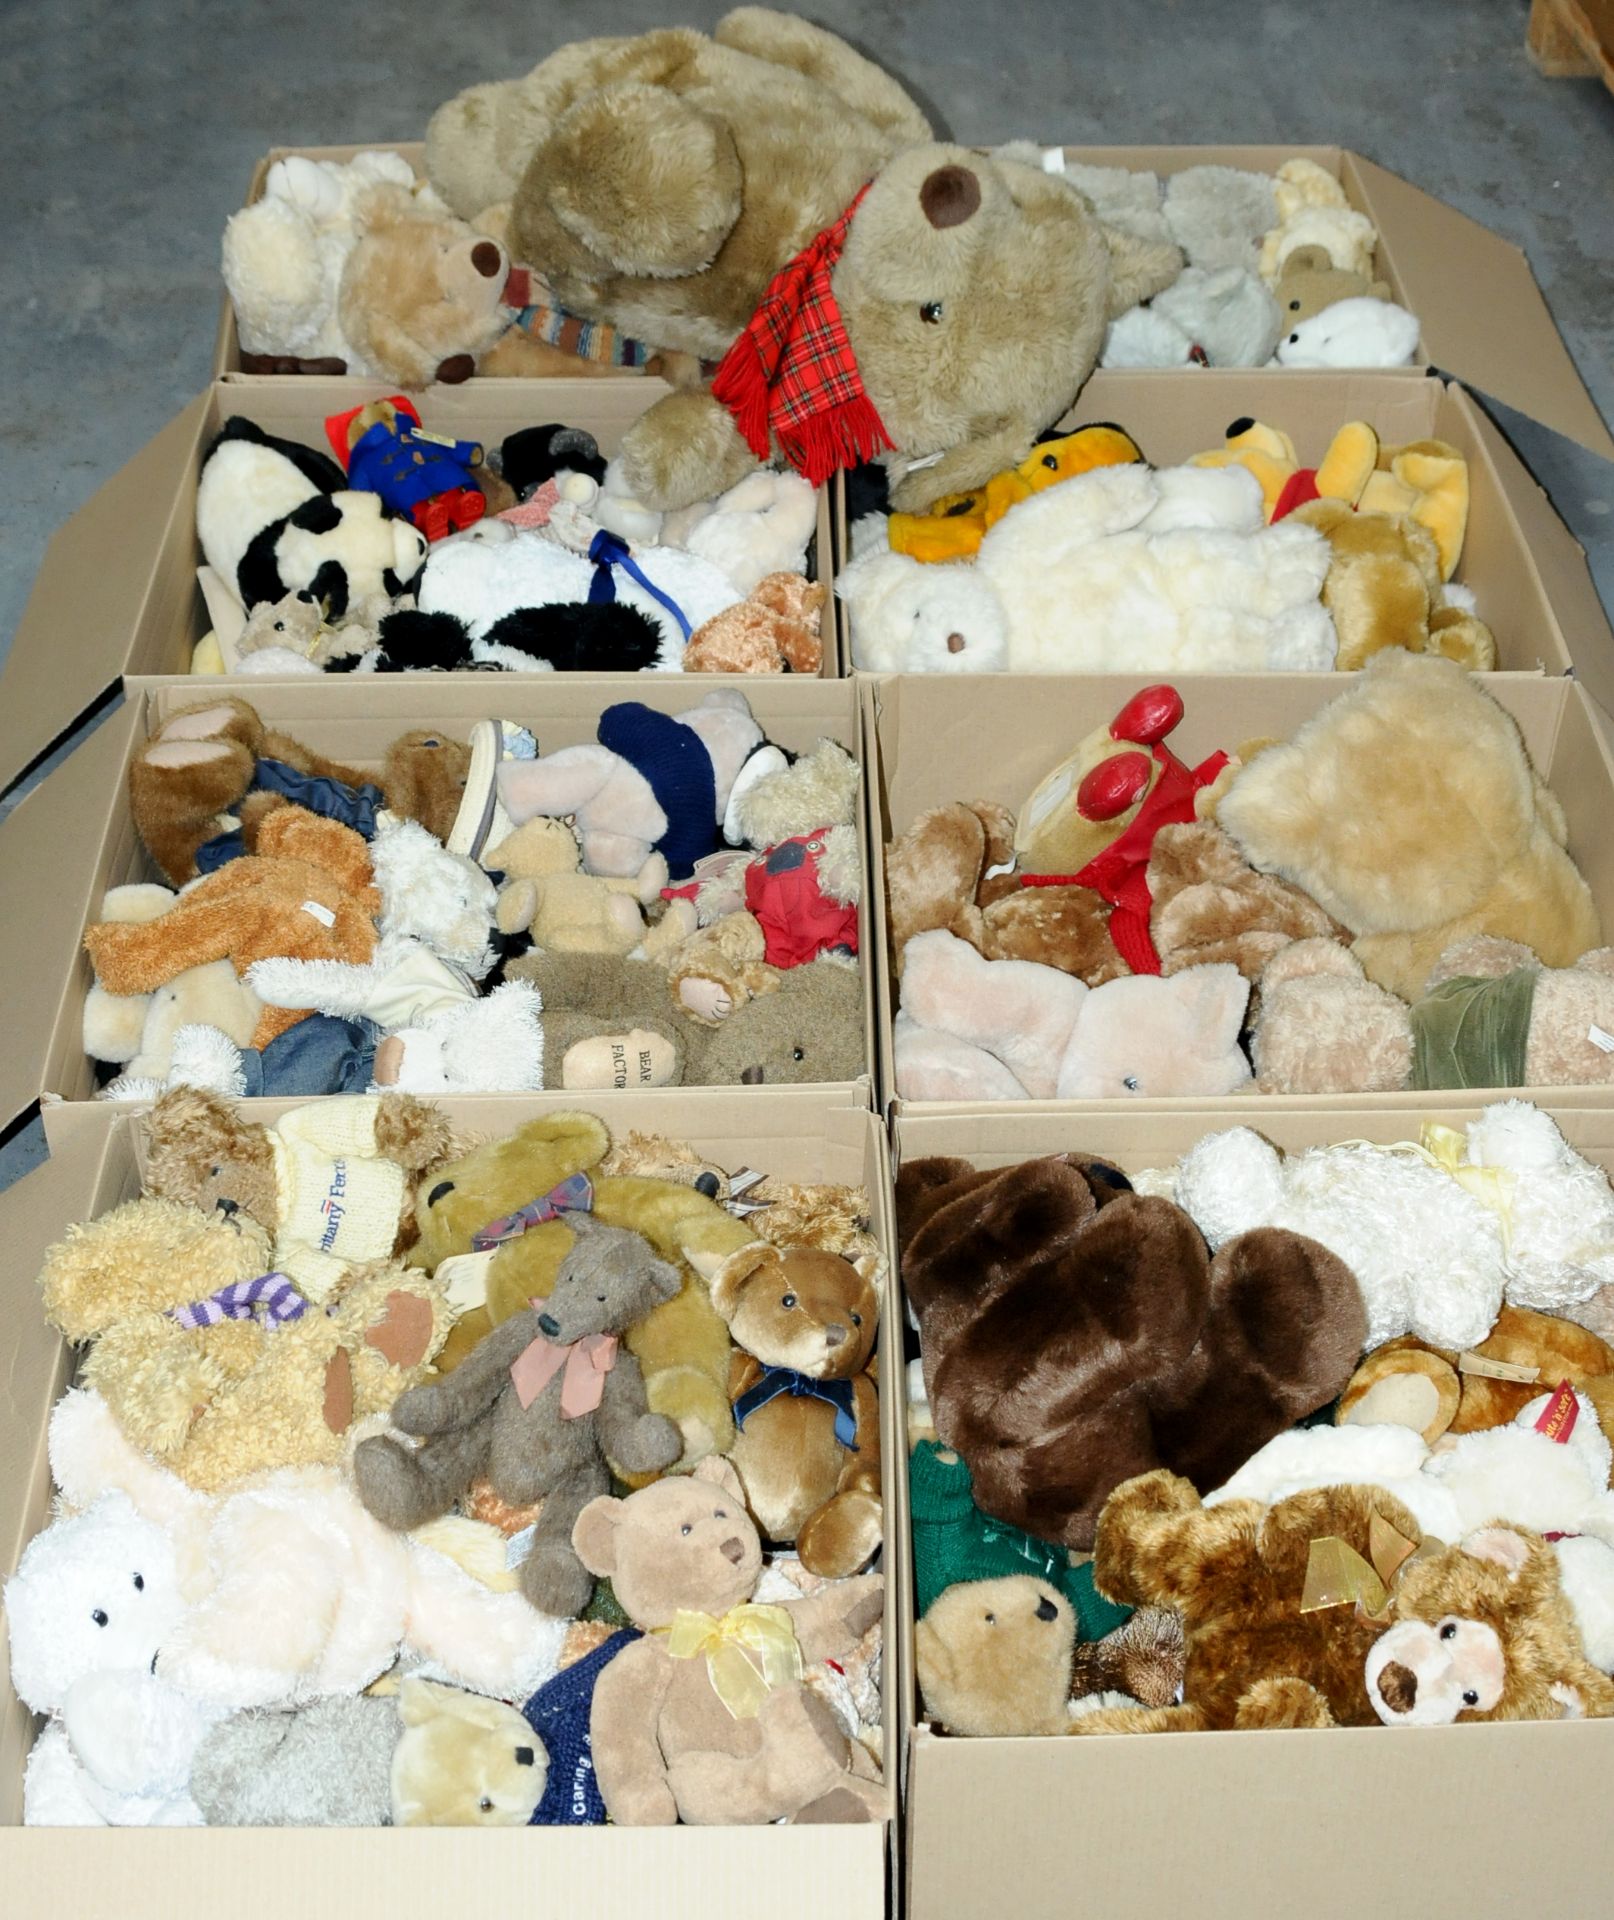 Large quantity of plush teddy bears